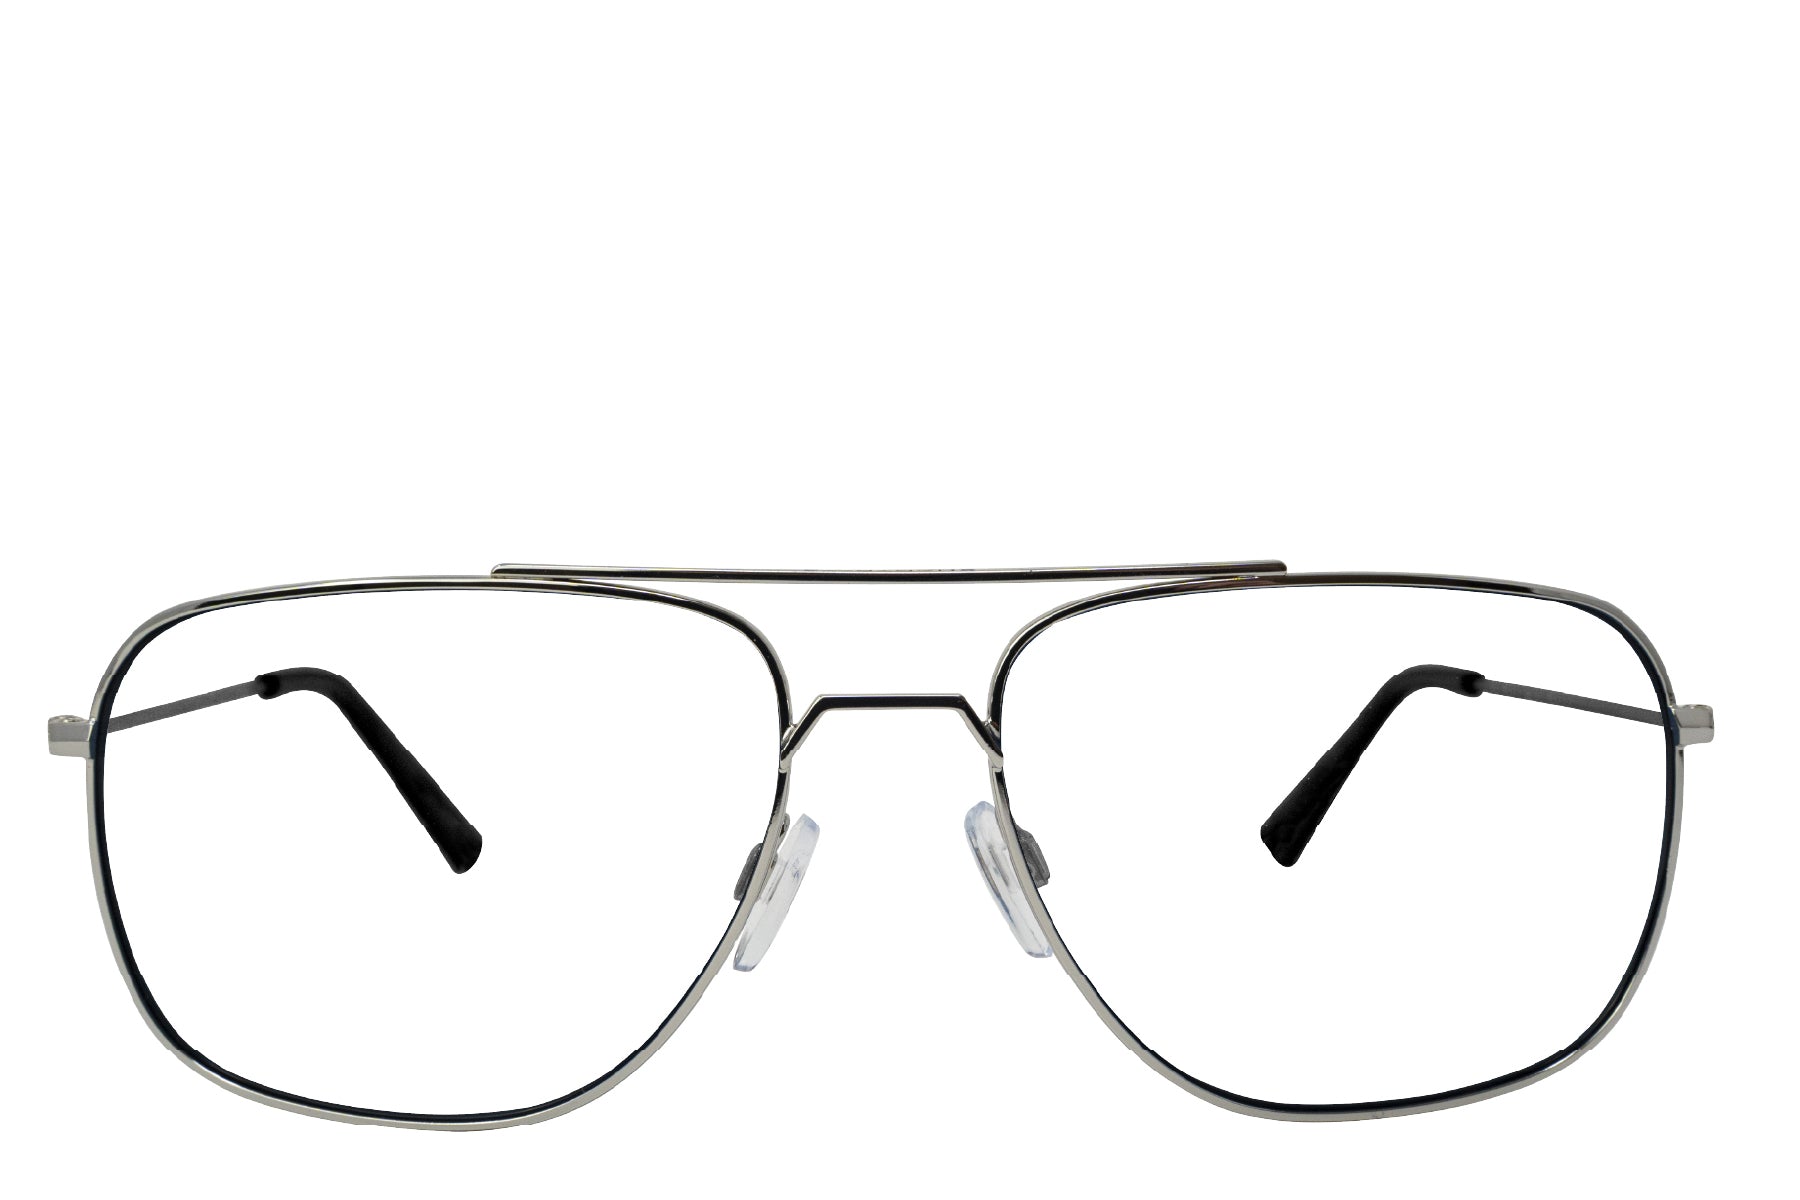 Navigator Rx - Silver Rx Shady Rays® | Polarized Sunglasses 